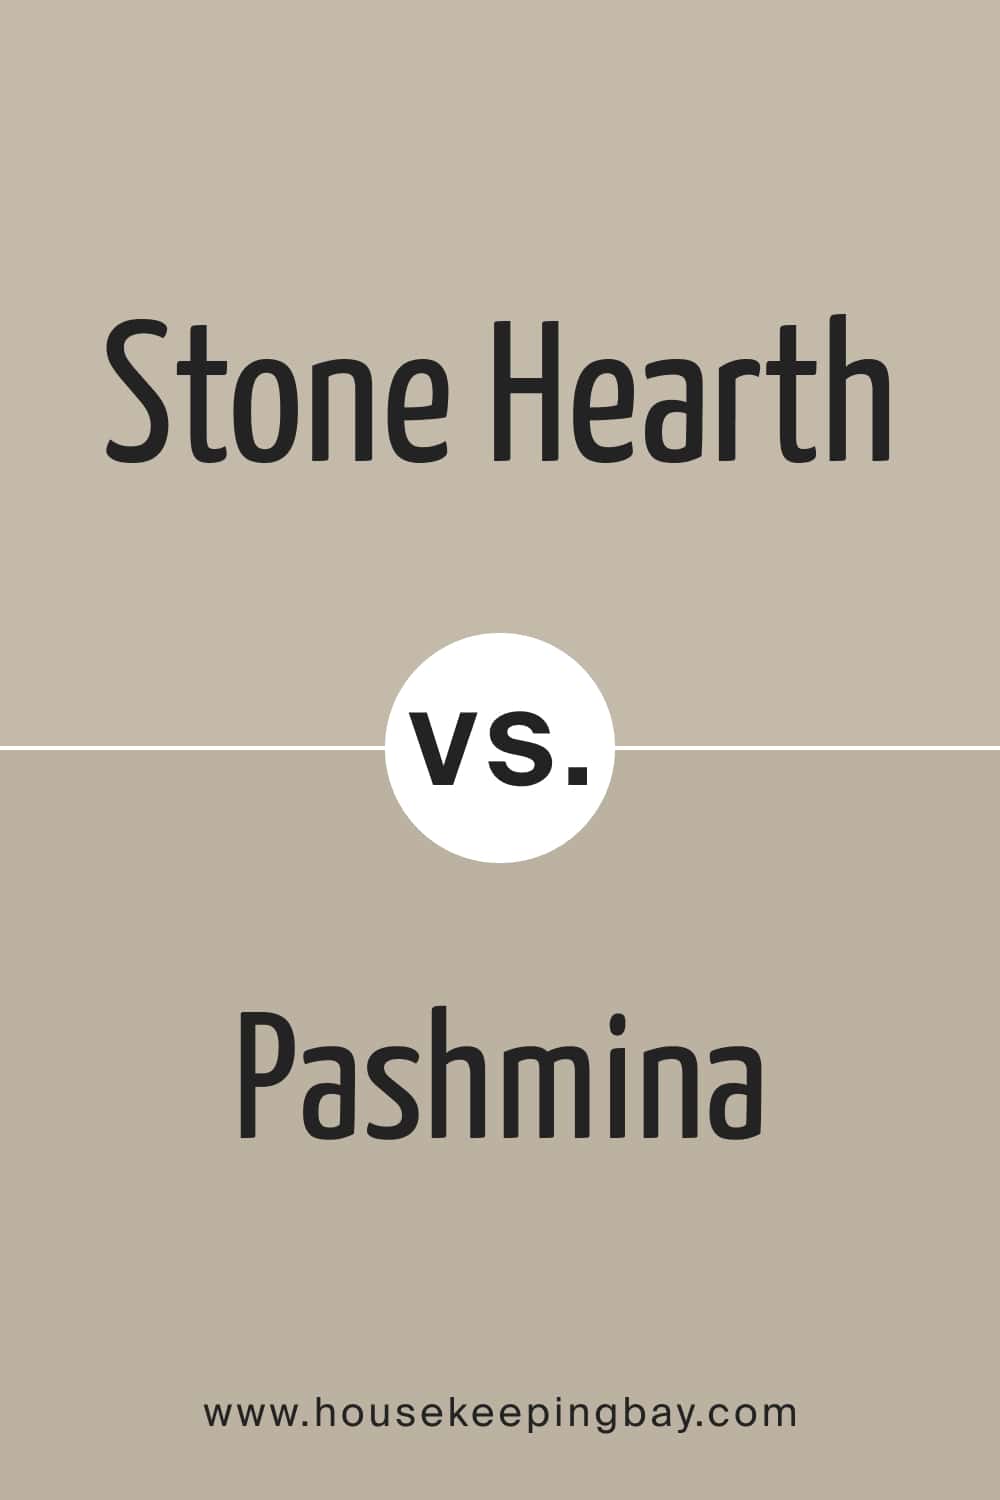 Stone Hearth vs. Pashmina